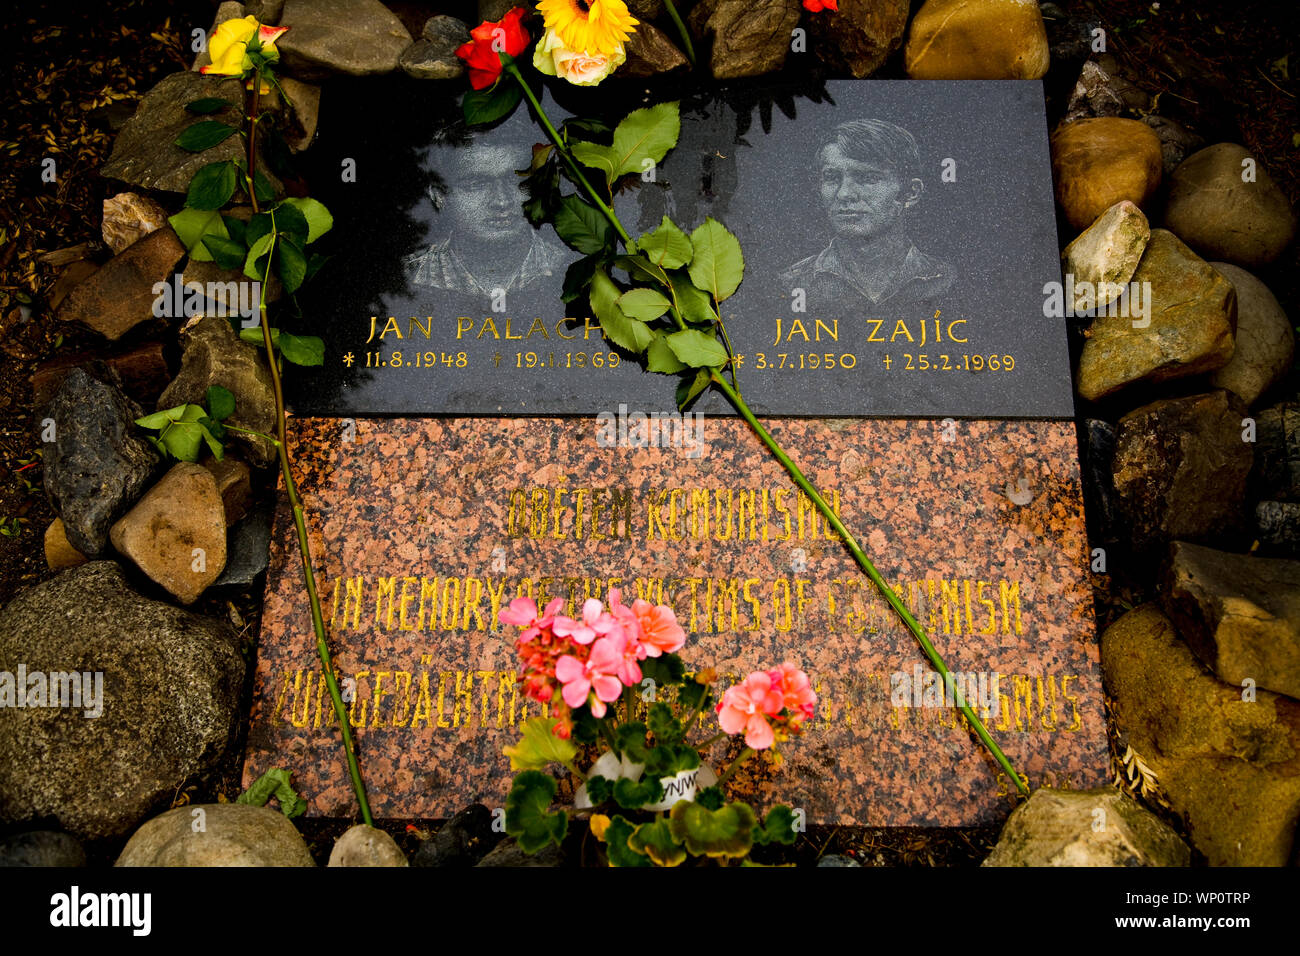 Memorial to Jan Palach and Jan Zajic who burned themselves alive in 1969 protesting against the Soviet invasion. Wenceslas Square (Vaclavske nam) Prag Stock Photo